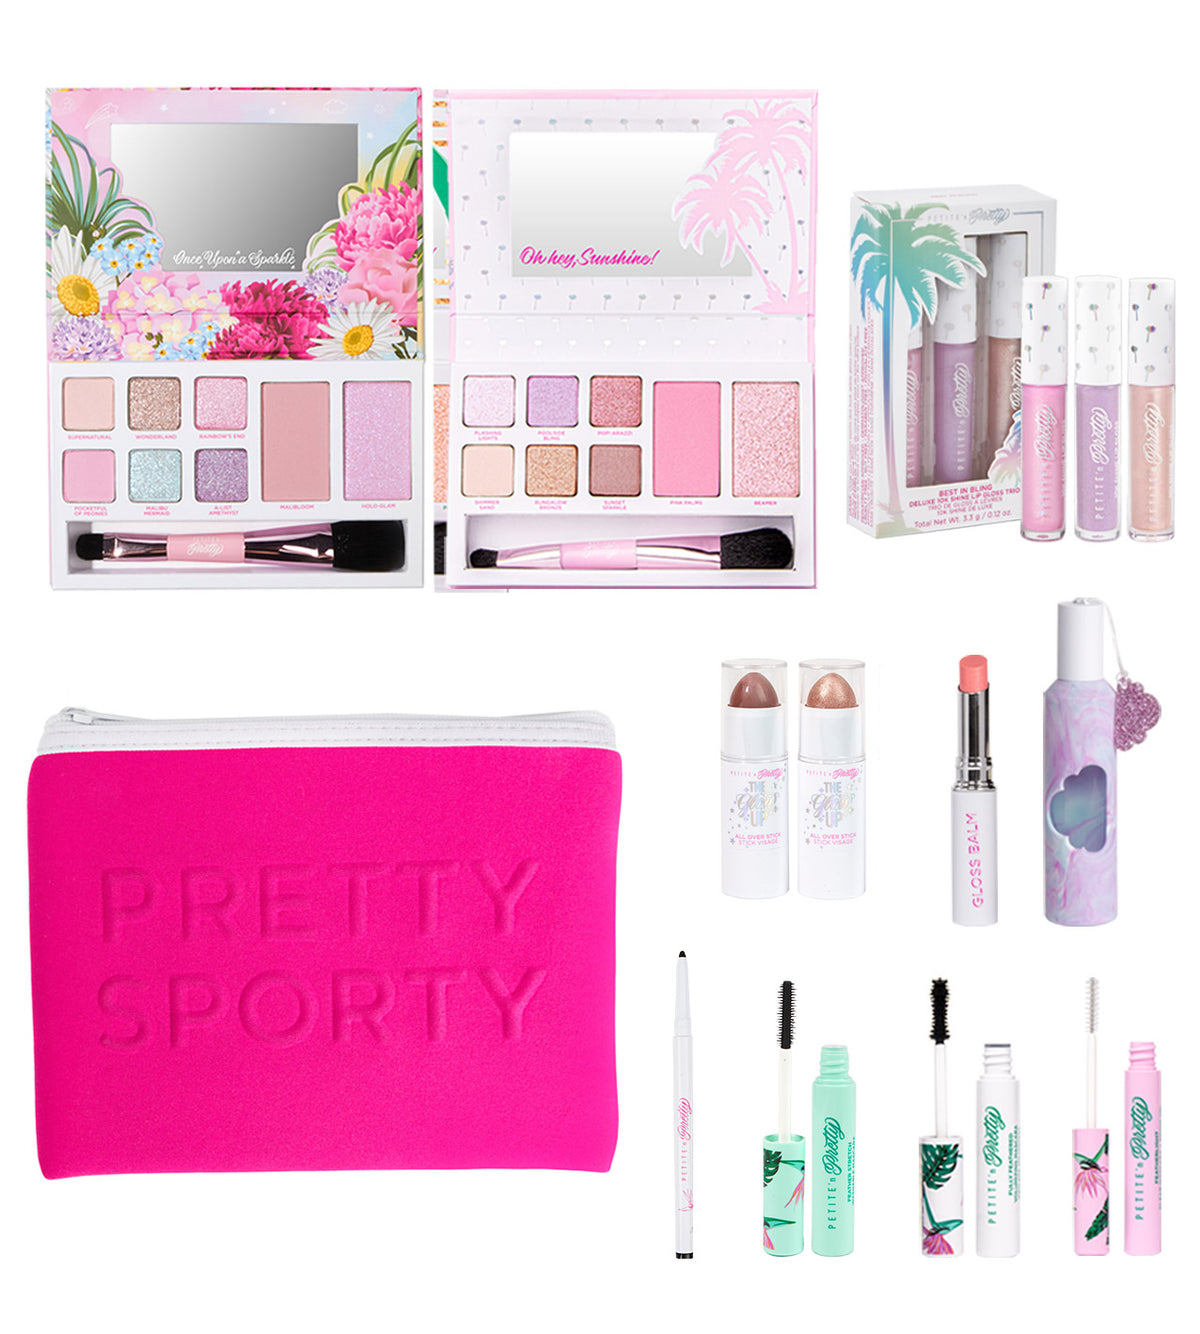 Petite 'n Pretty Gift Bag - Petite 'n Pretty - A beauty brand leading the  Sparkle Revolution!